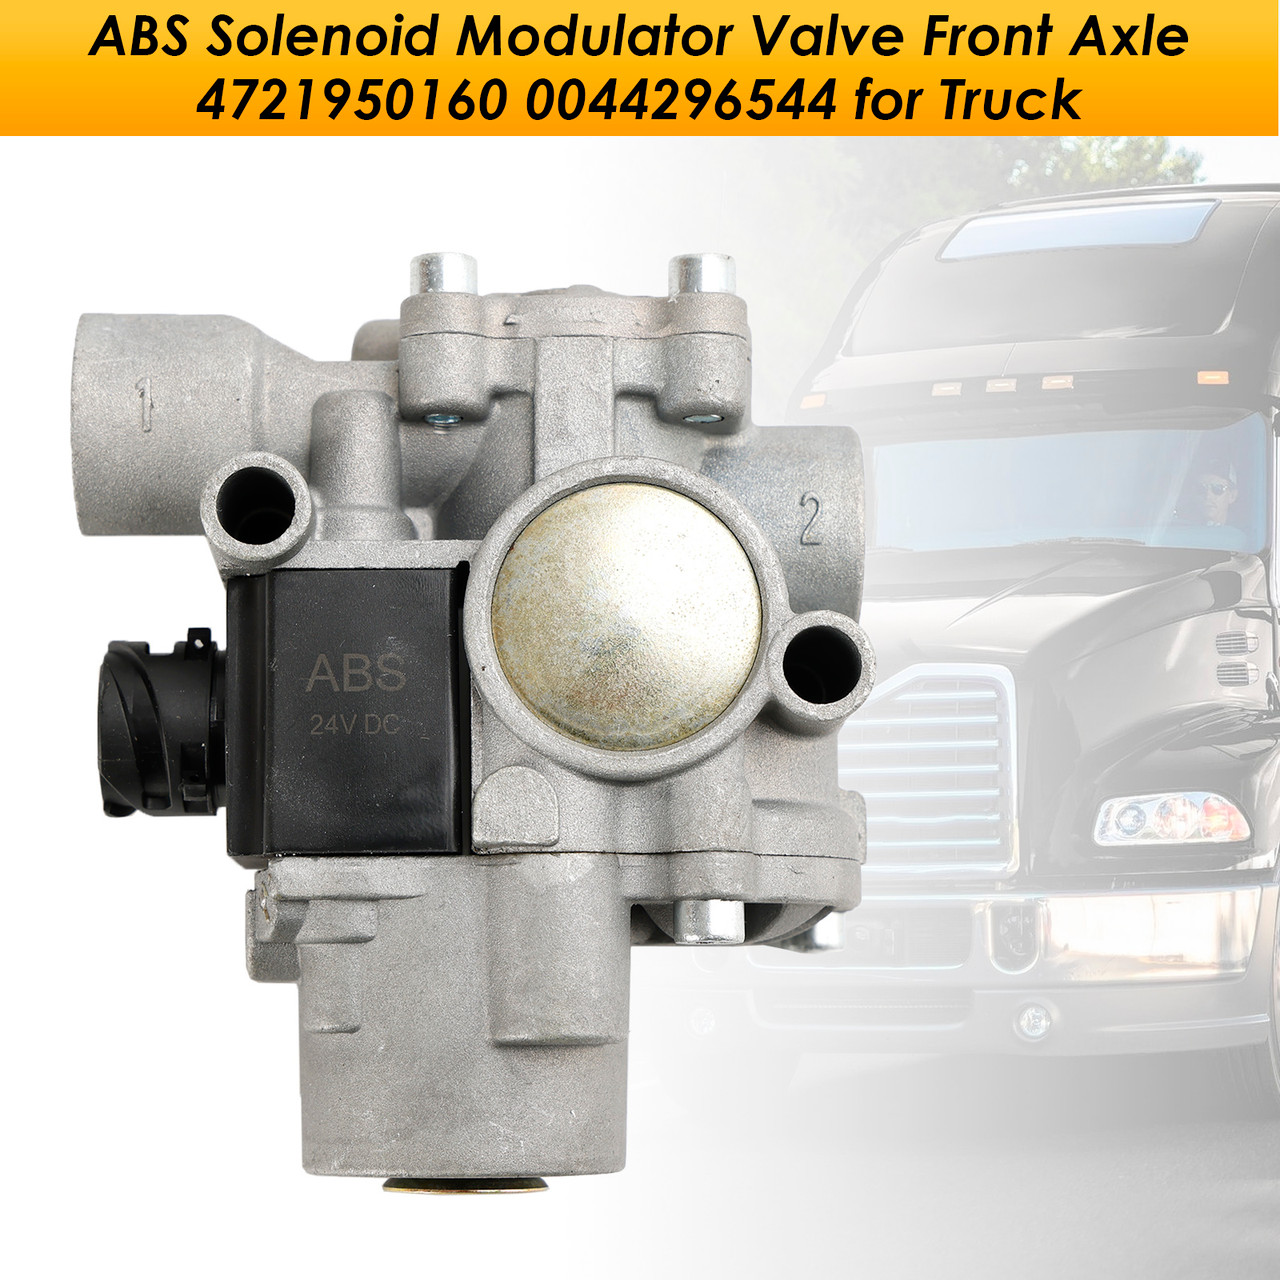 ABS Solenoid Modulator Valve Front Axle 4721950160 0044296544 for Truck